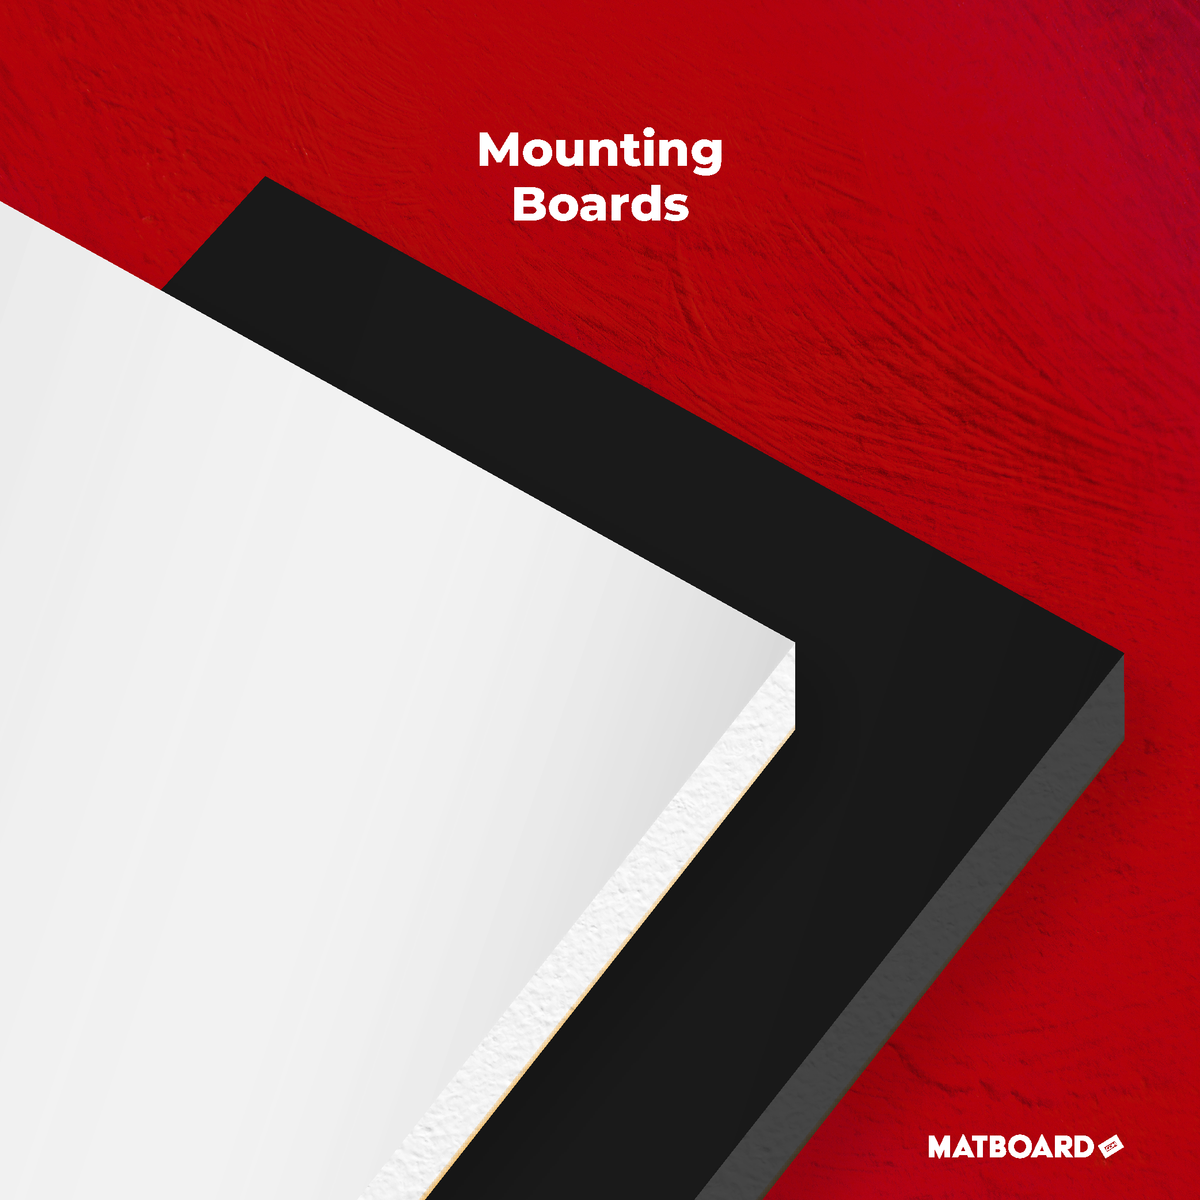 Mat Board 32X40 Cream White Photo Mount - MICA Store